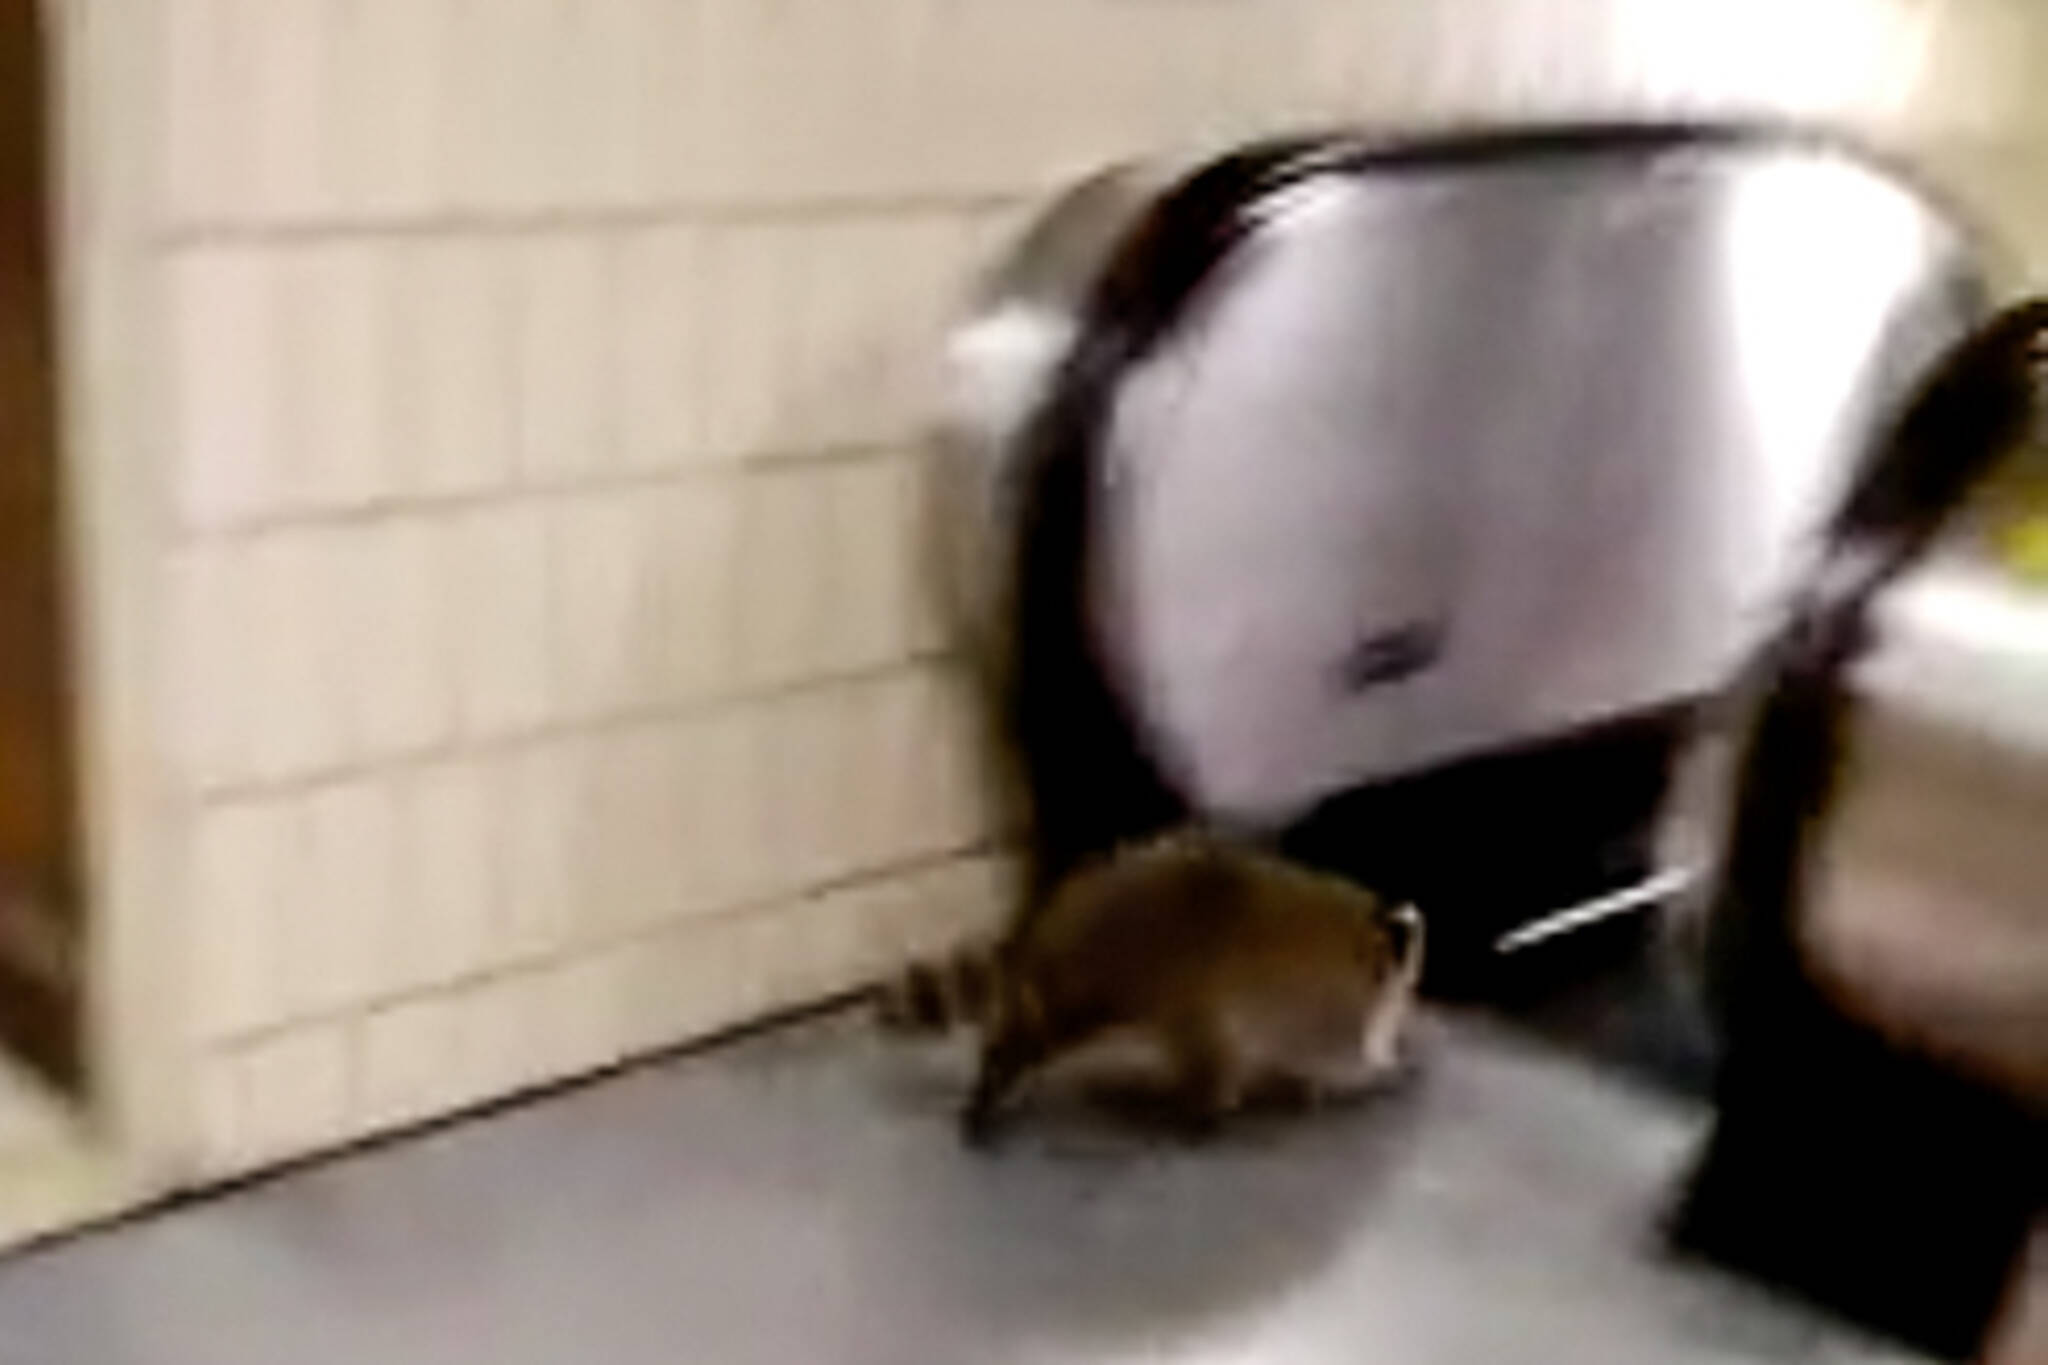 toronto raccoon escalator